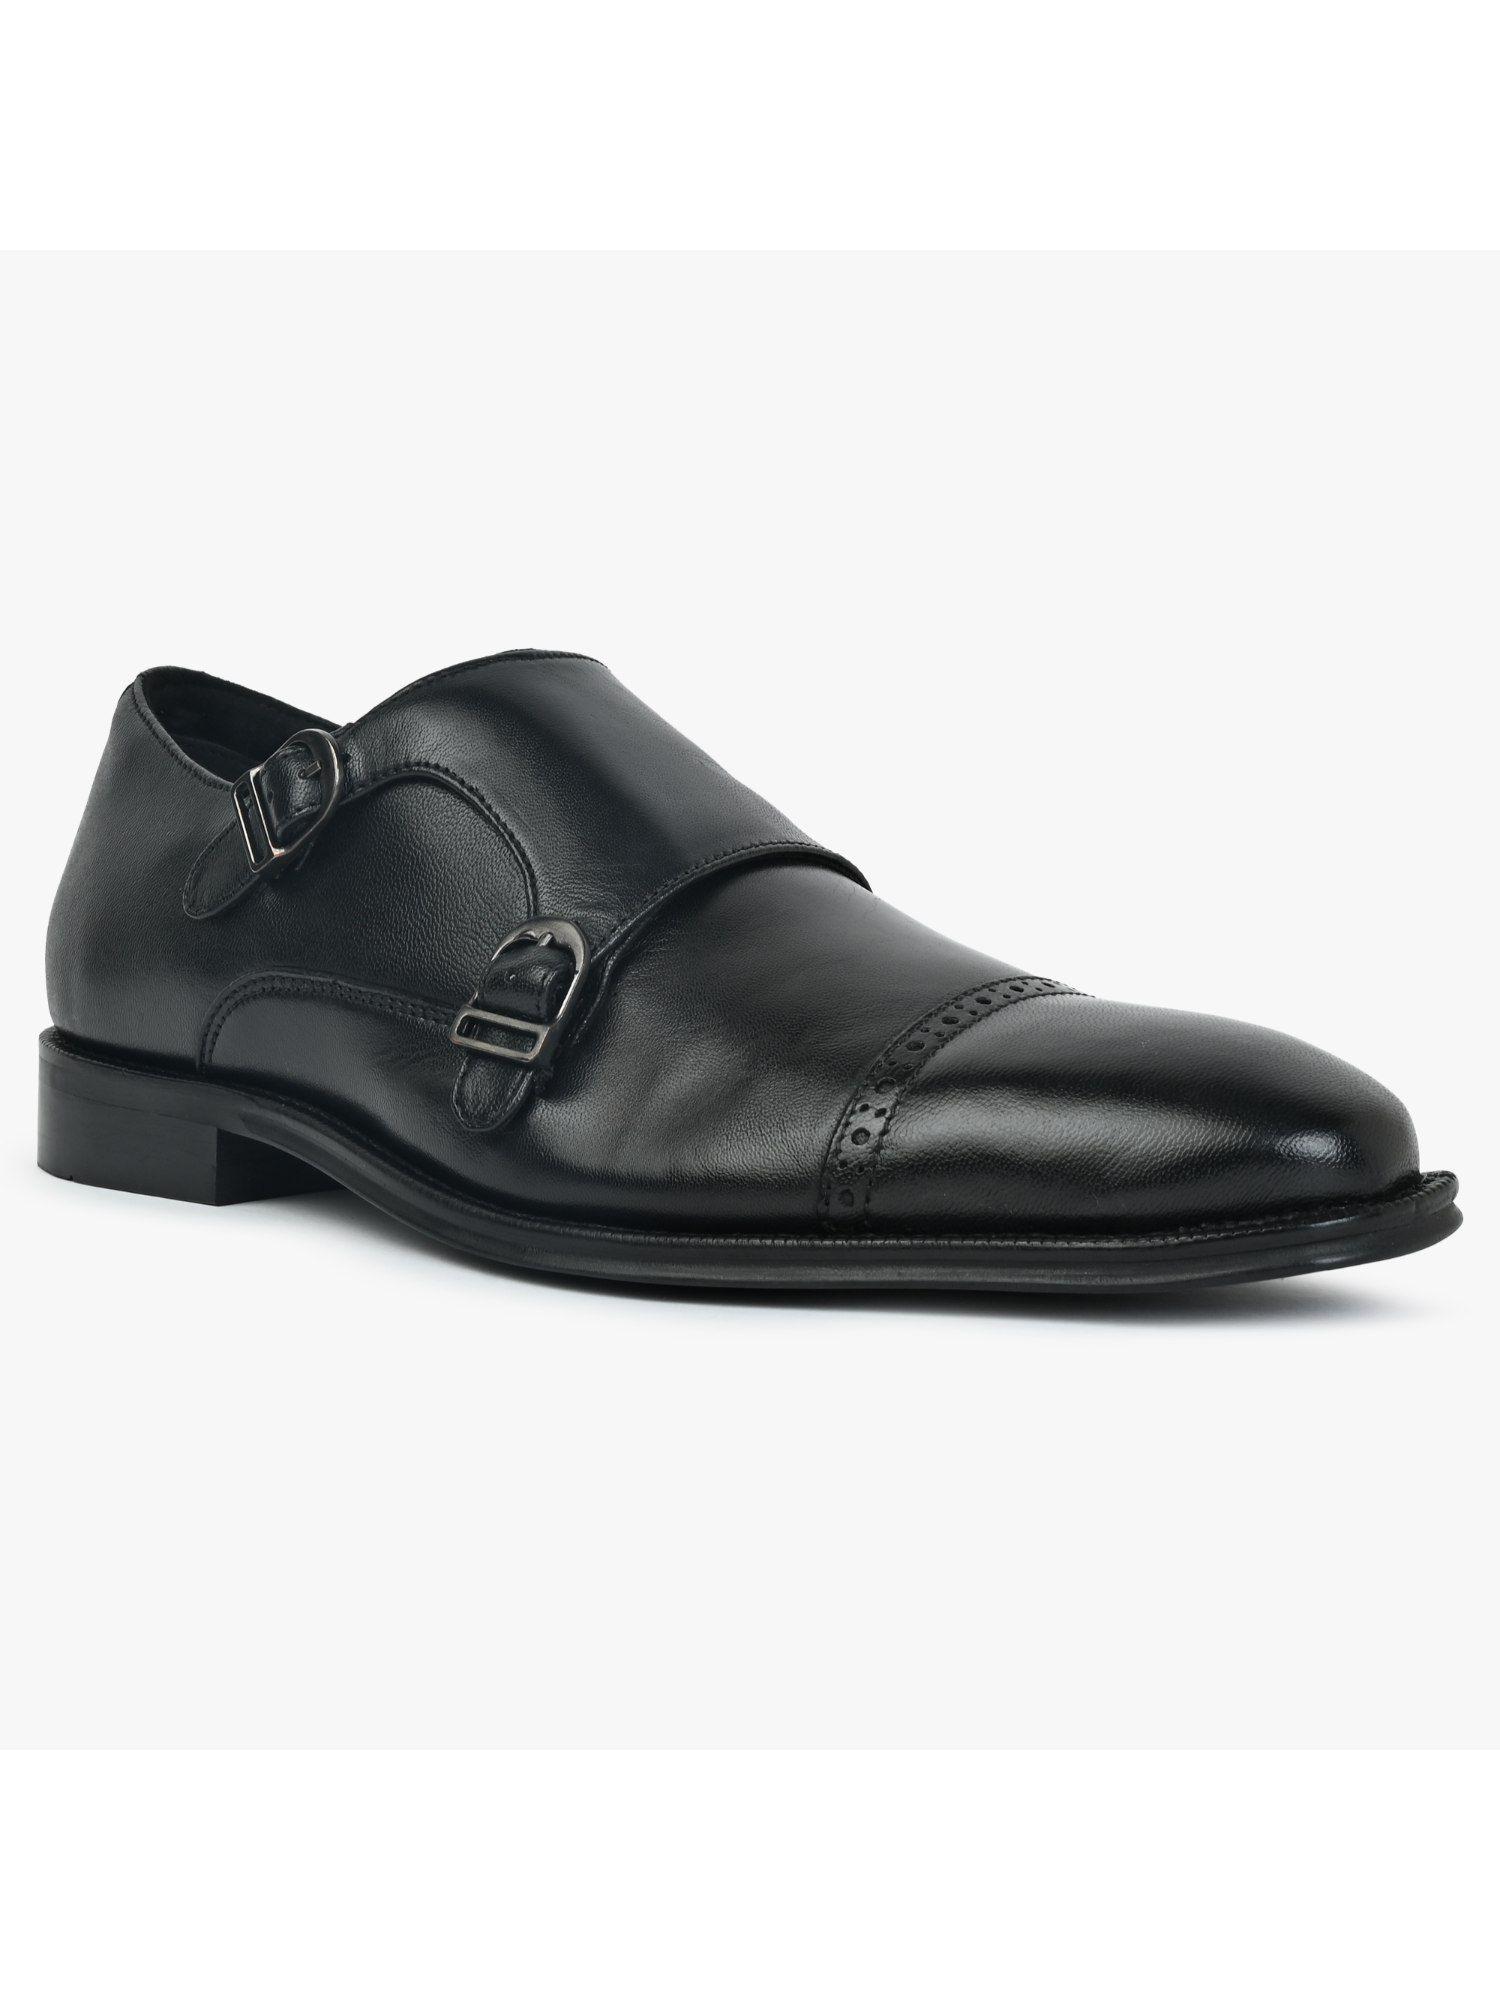 standen001 black leather formal loafers